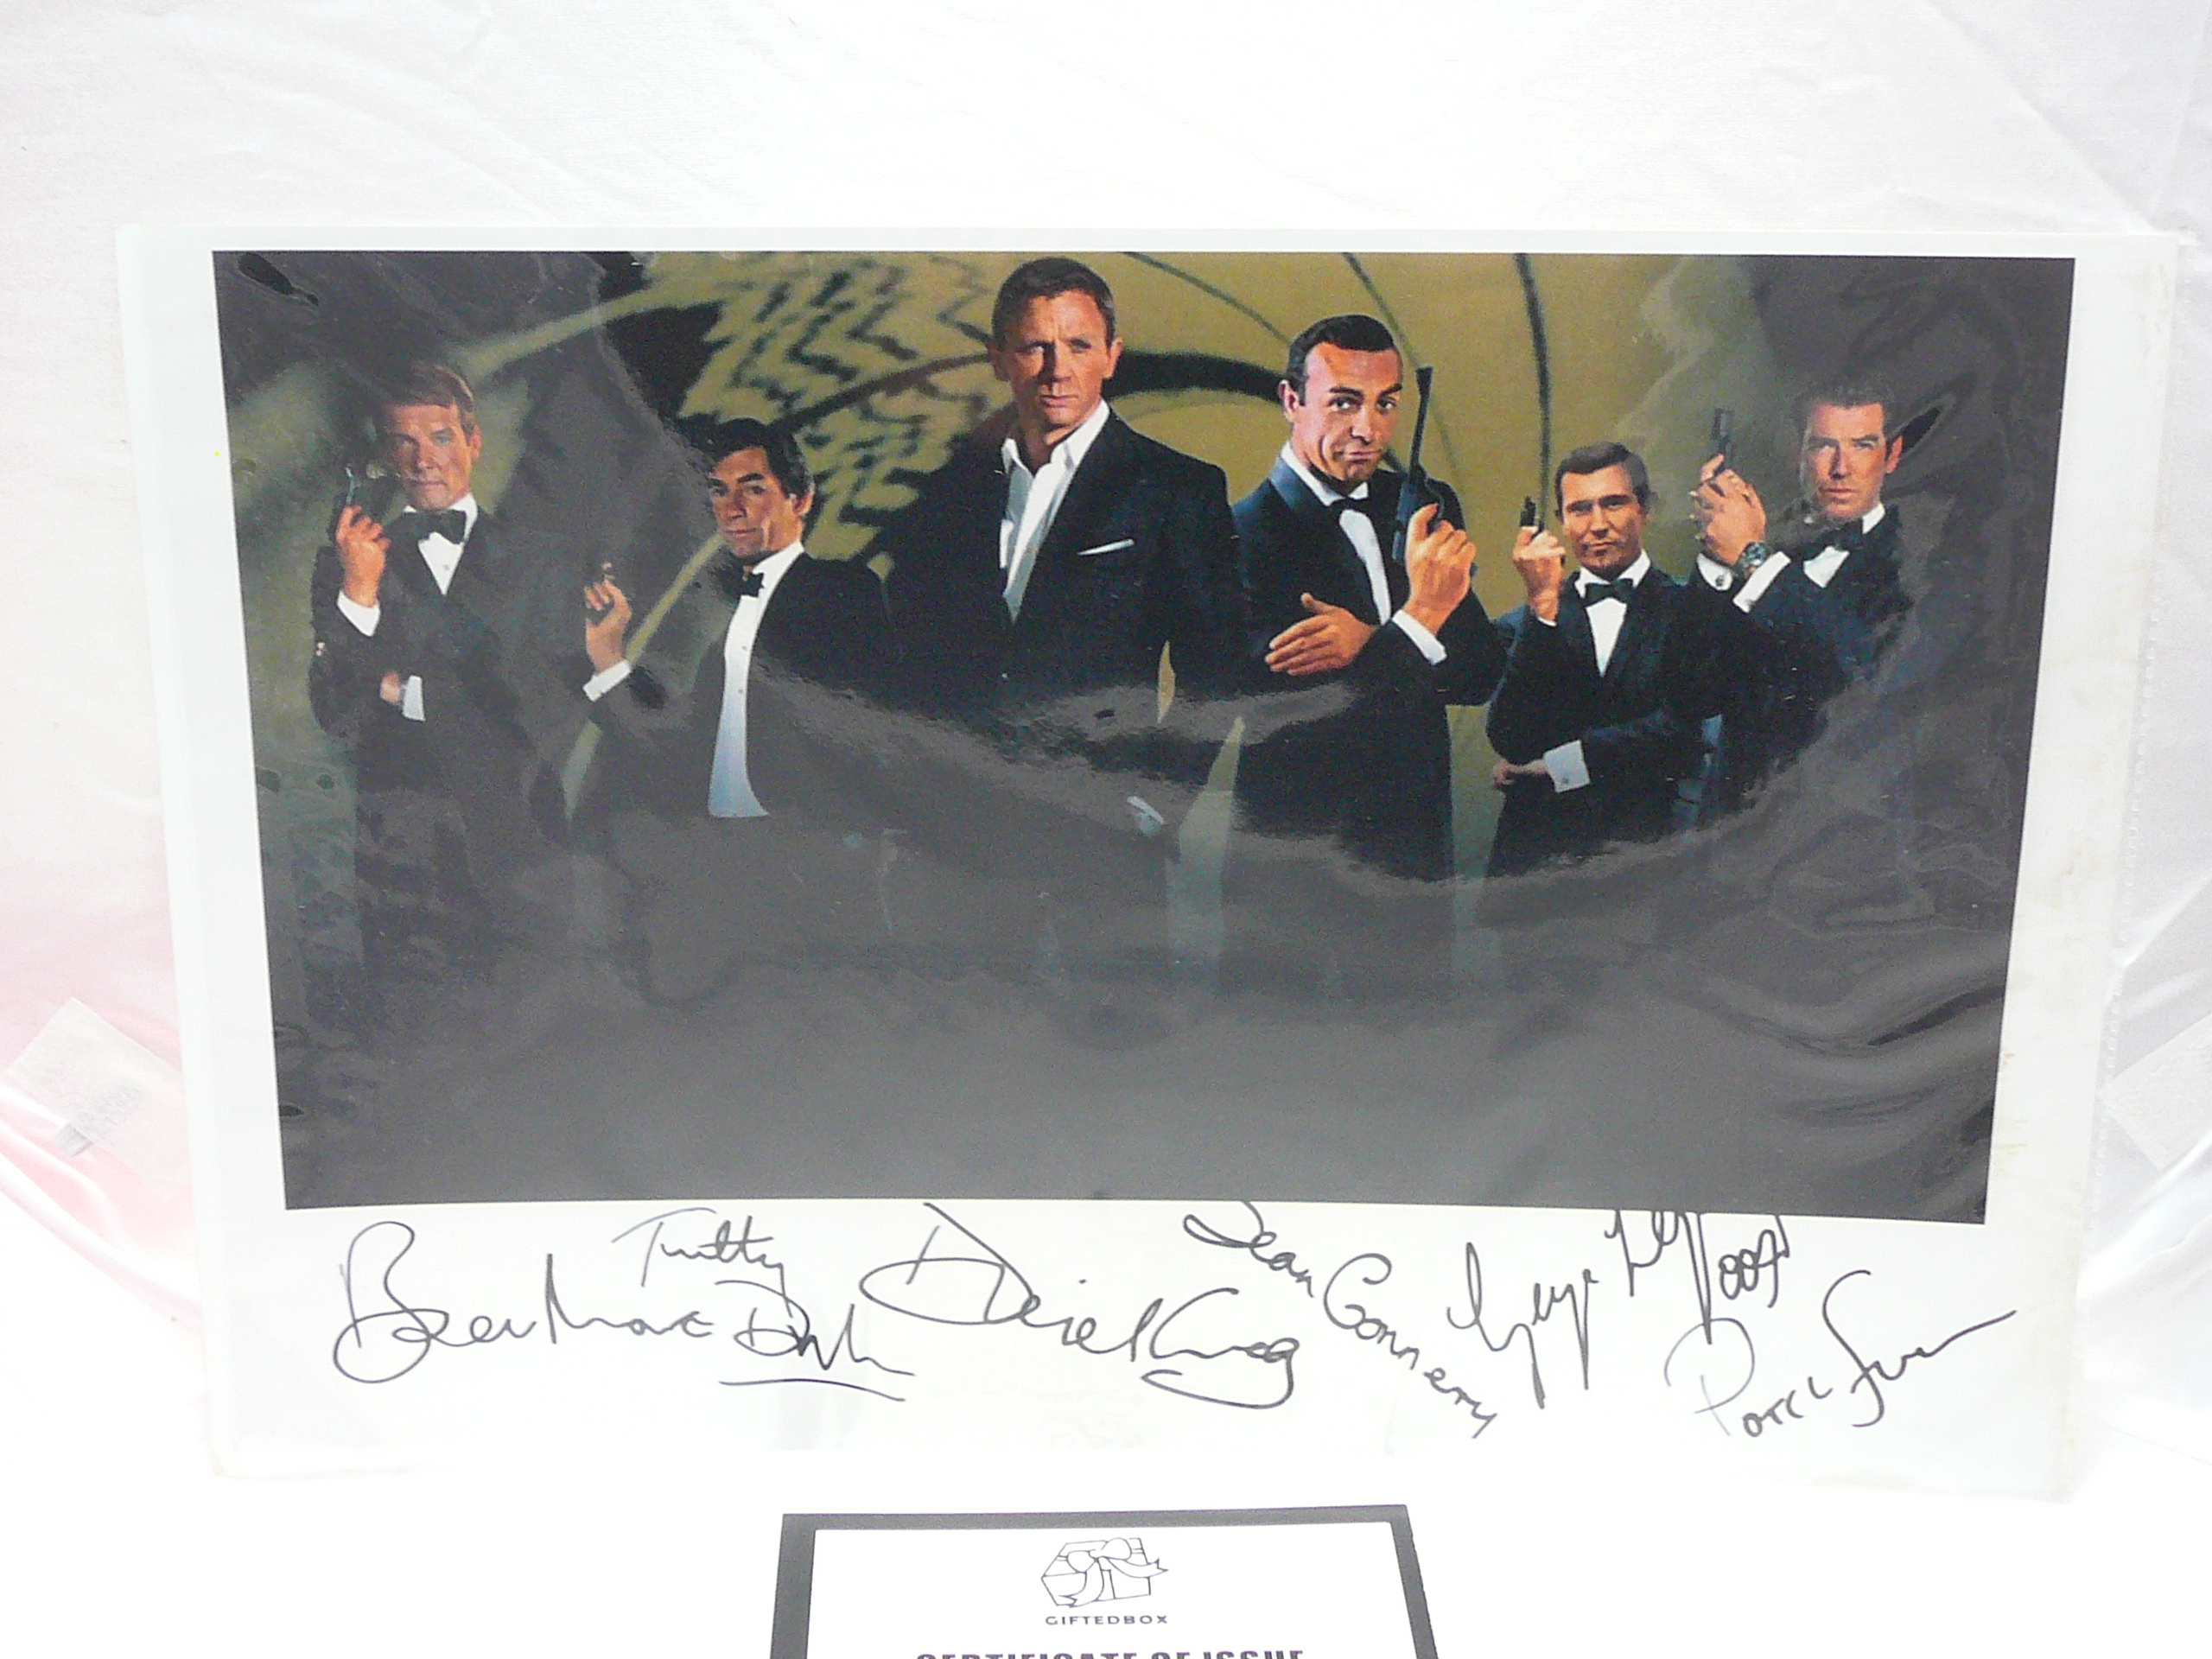 007 framed Bond group photo - Image 3 of 3